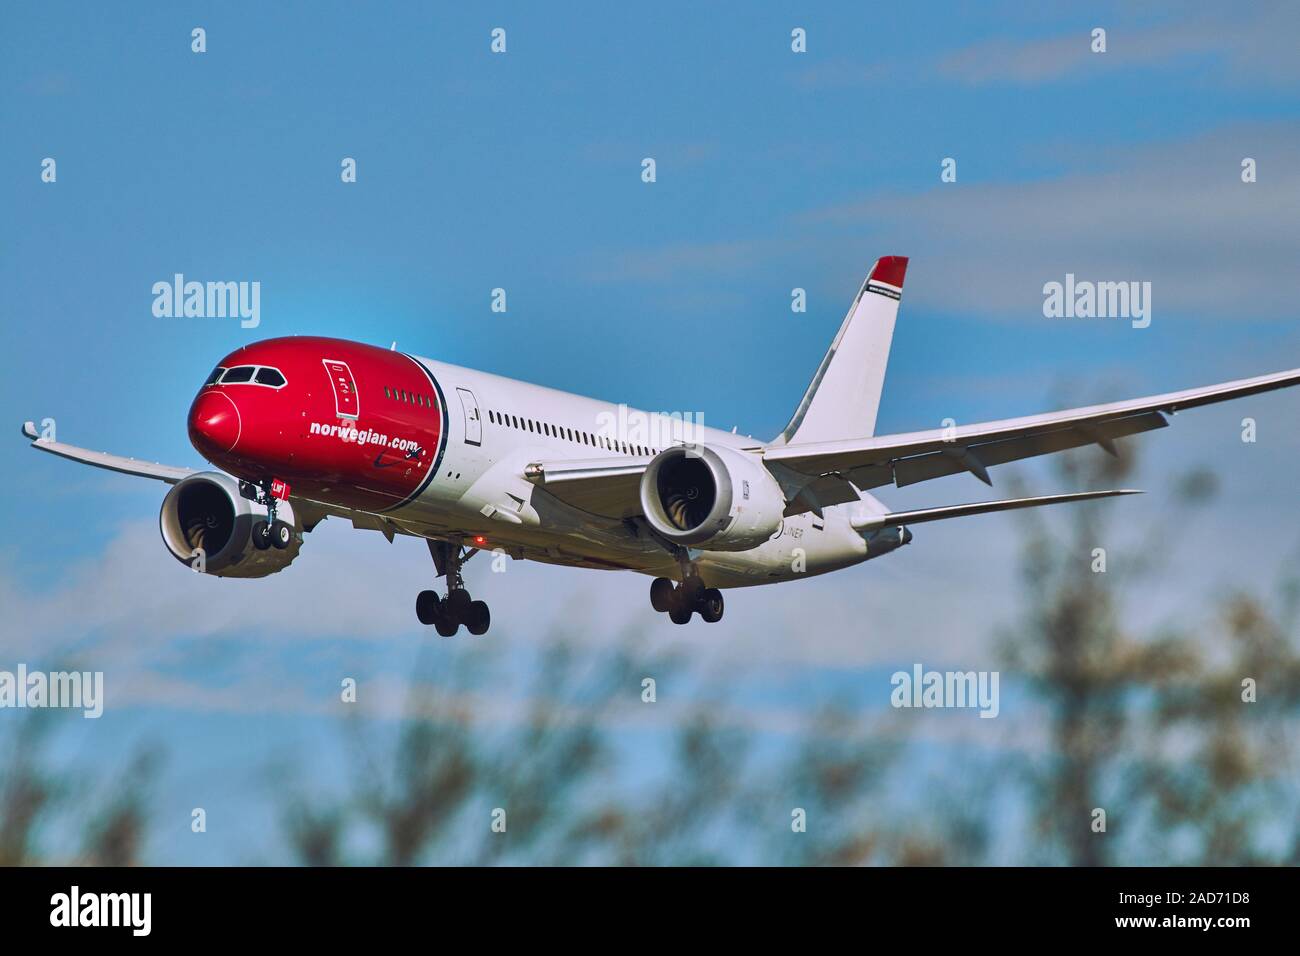 L'atterrissage à l'aéroport norvégien LEBL (Josep Tarradellas - El Prat Barcelona) Banque D'Images